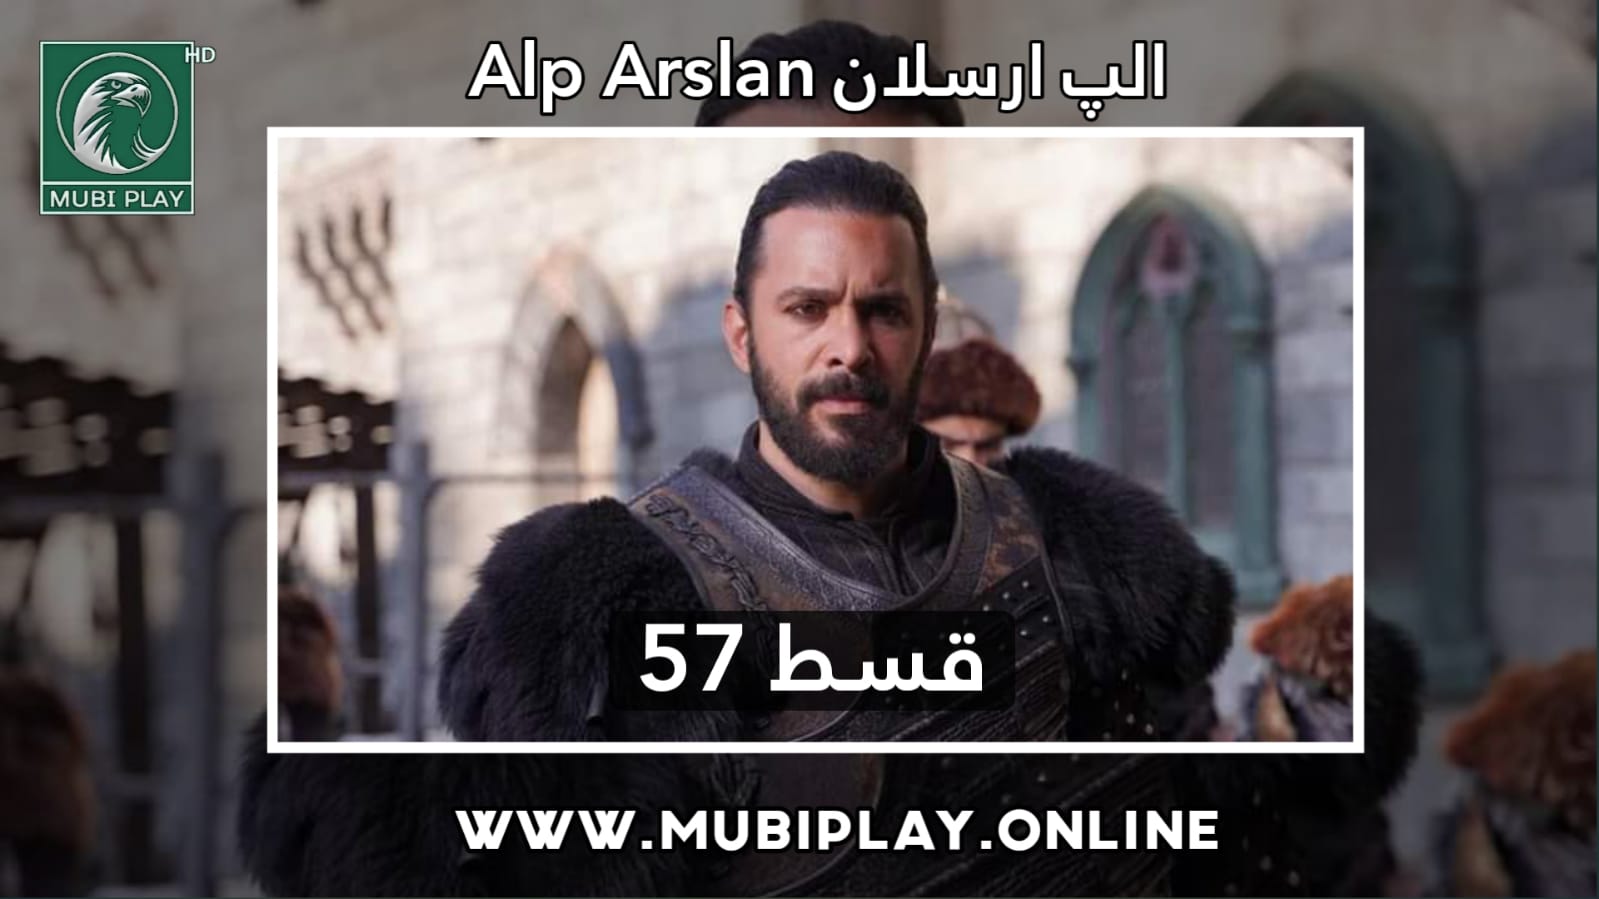 AlpArslan Buyuk Selcuklu Episode 57 with Urdu & English Subtitles by MubiPlay